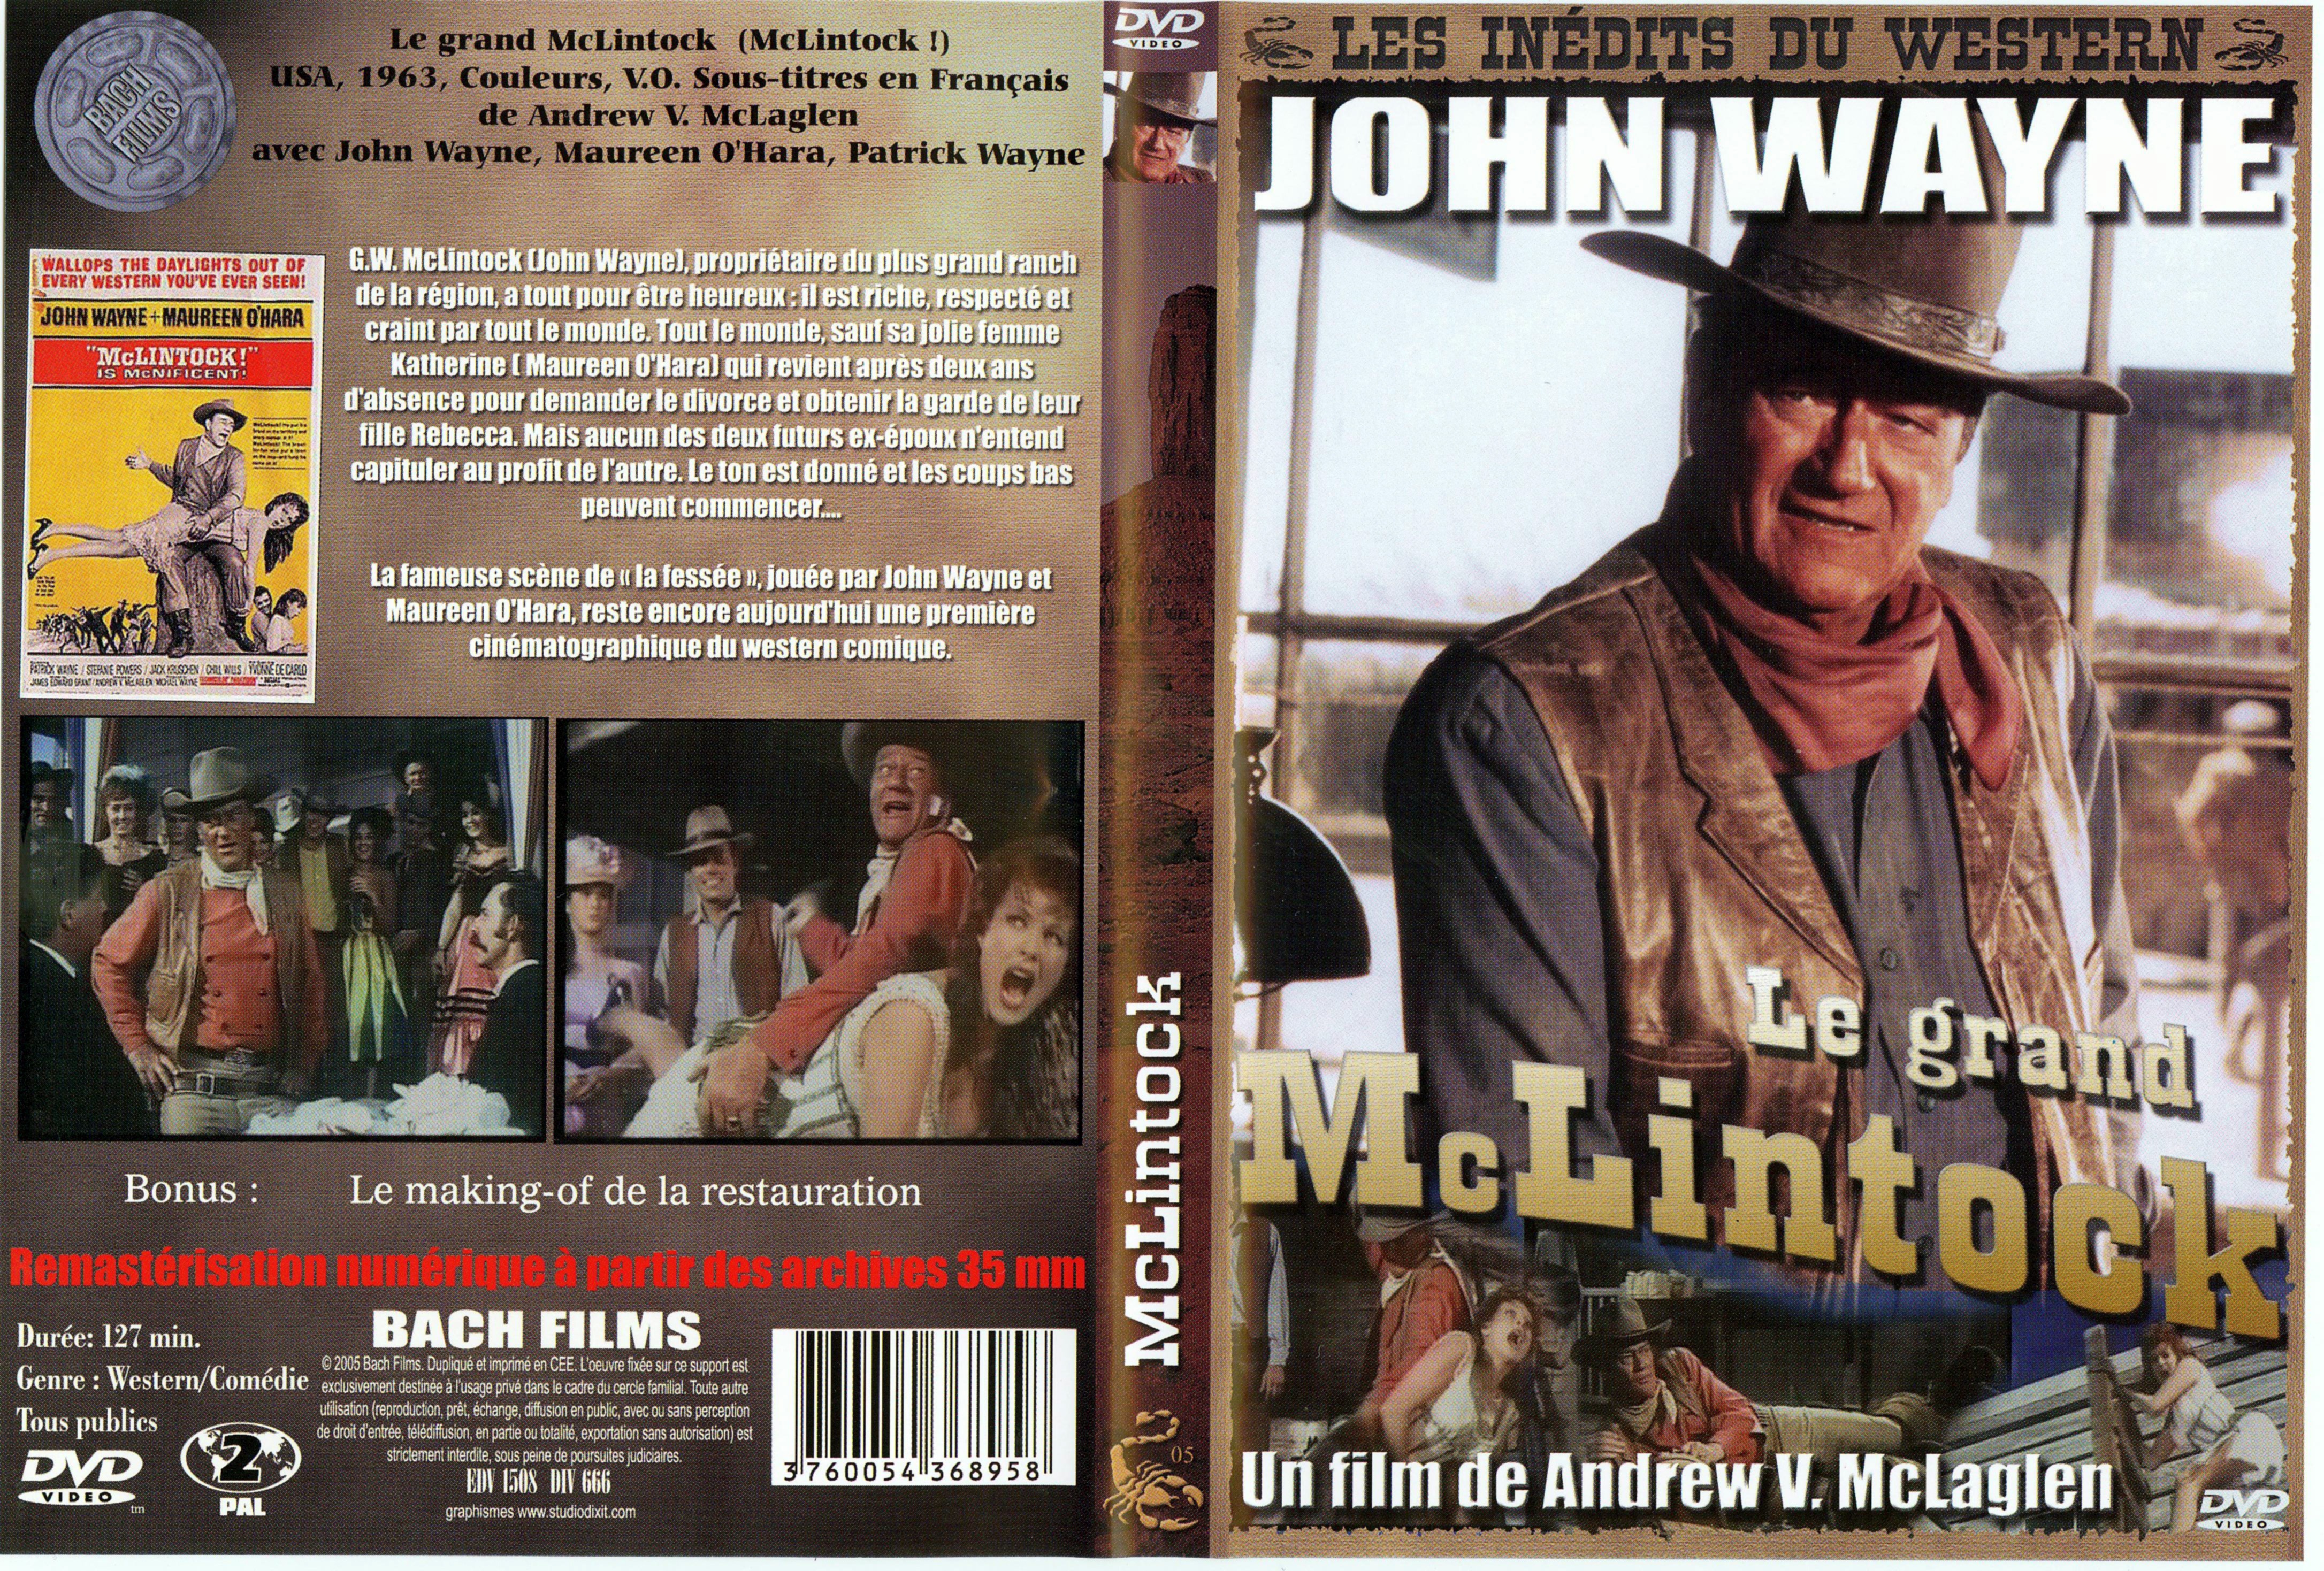 Jaquette DVD Le grand McLintock v3